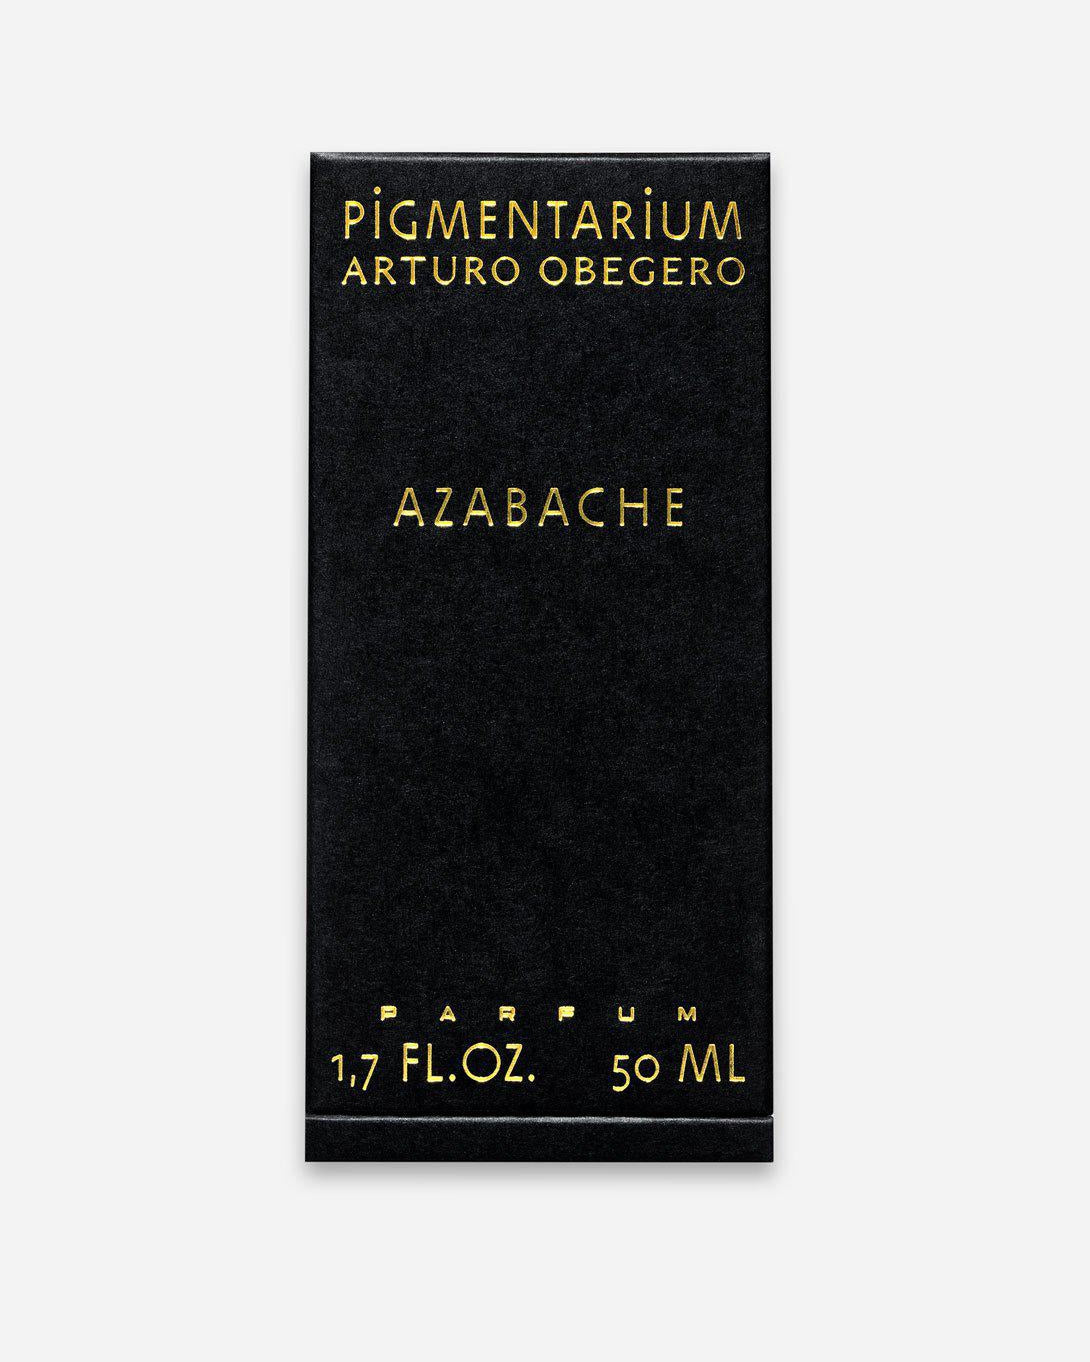 Azabache Perfume - Fragrance - Pigmentarium - Elevastor